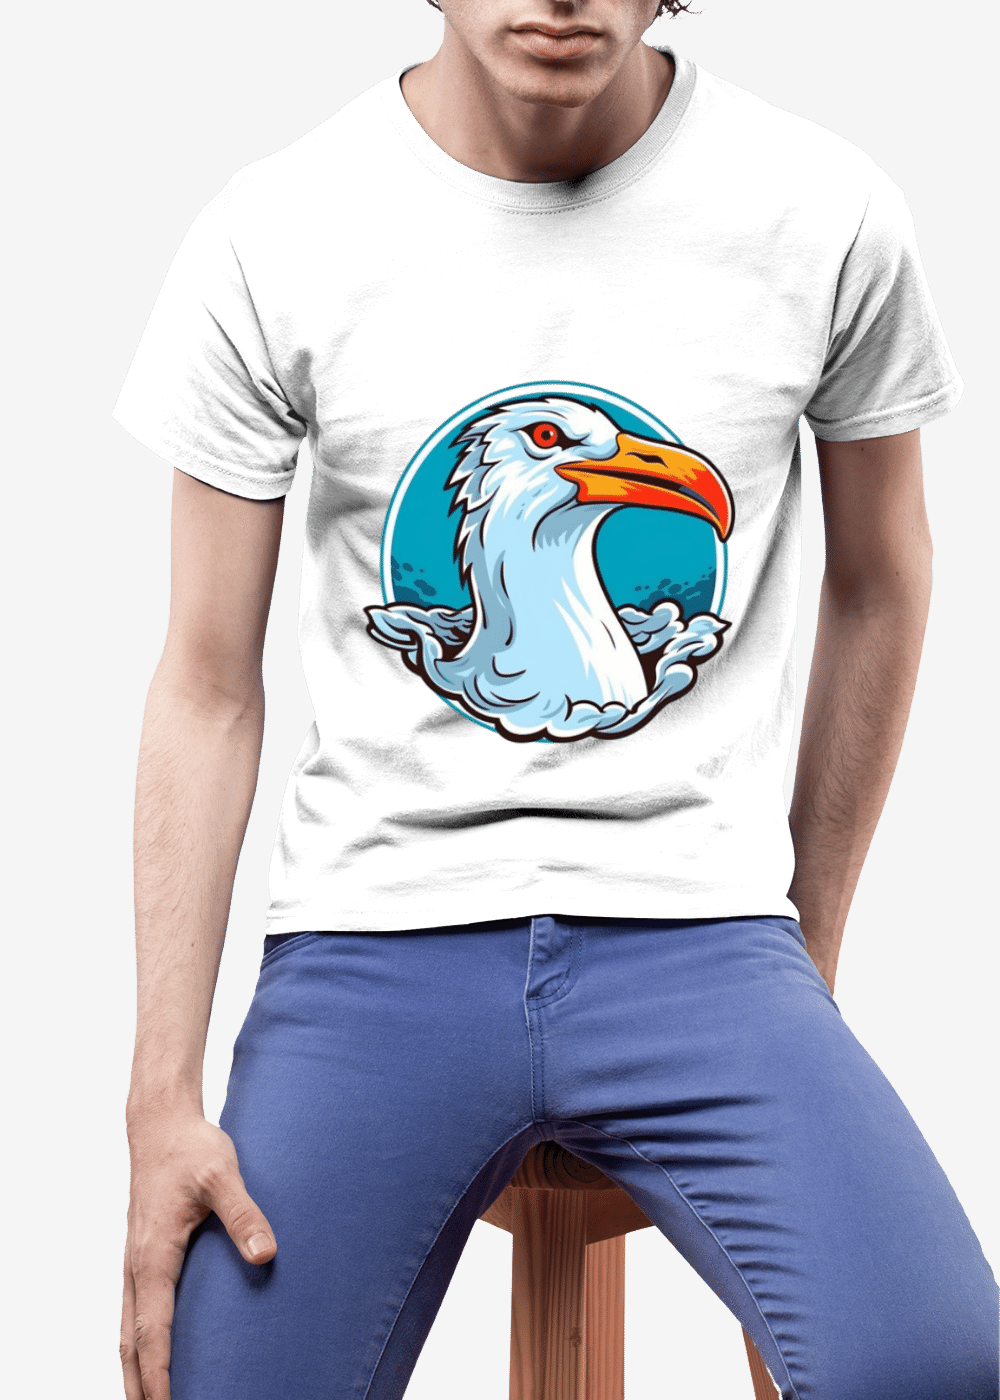 Seagull T Shirt for Men - Comic Style